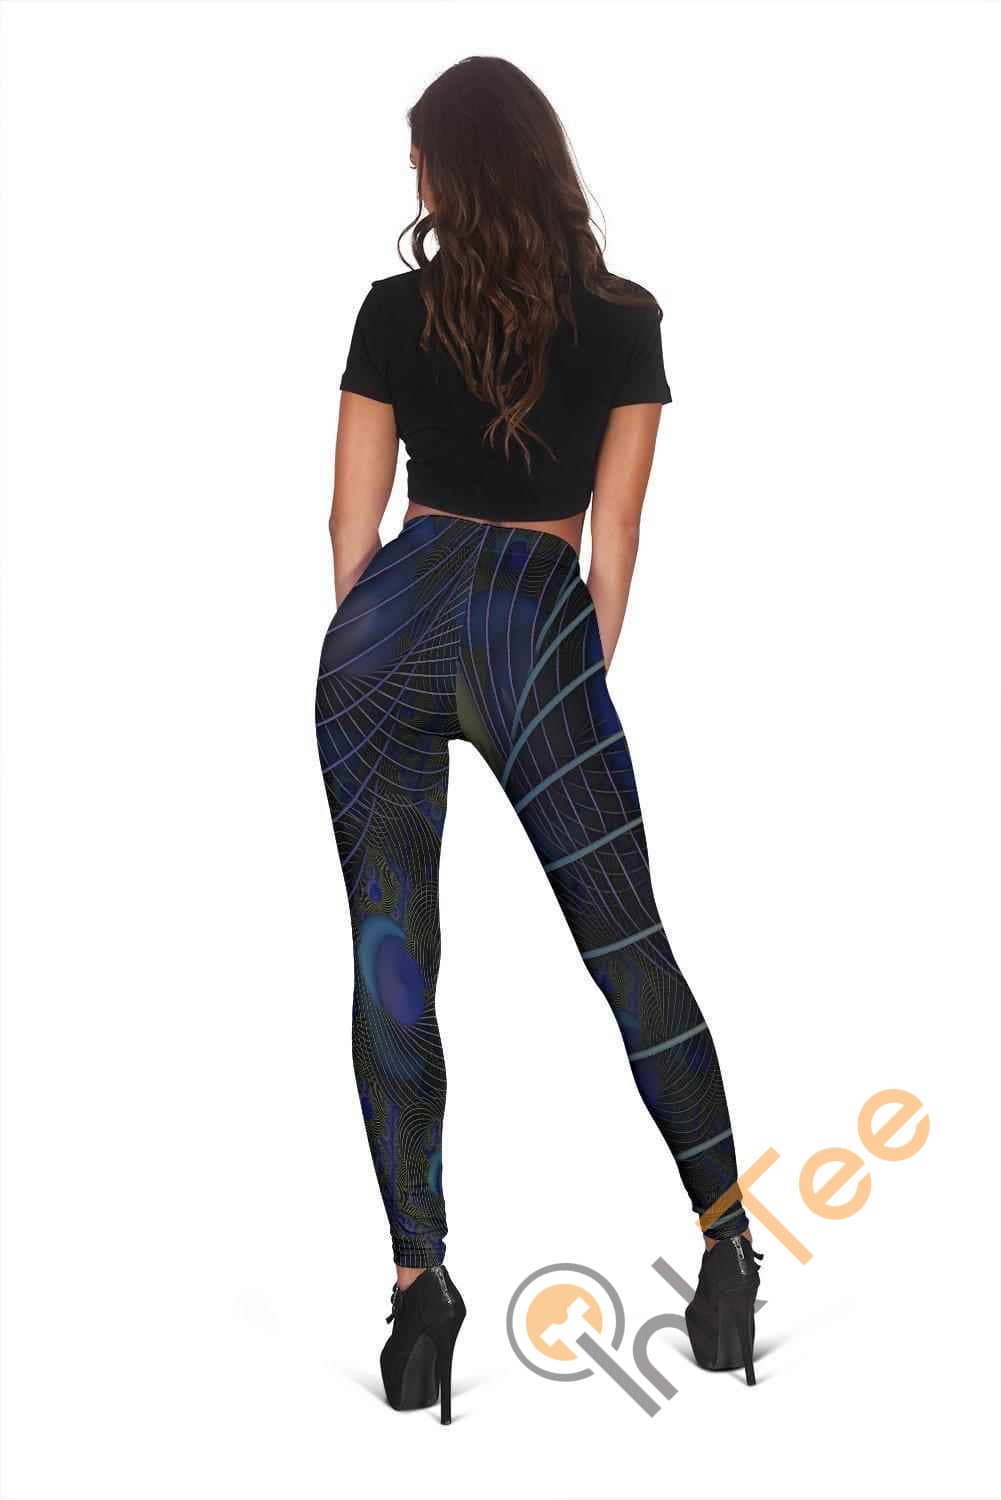 Inktee Store - Peacock 3D All Over Print For Yoga Fitness Women'S Leggings Image